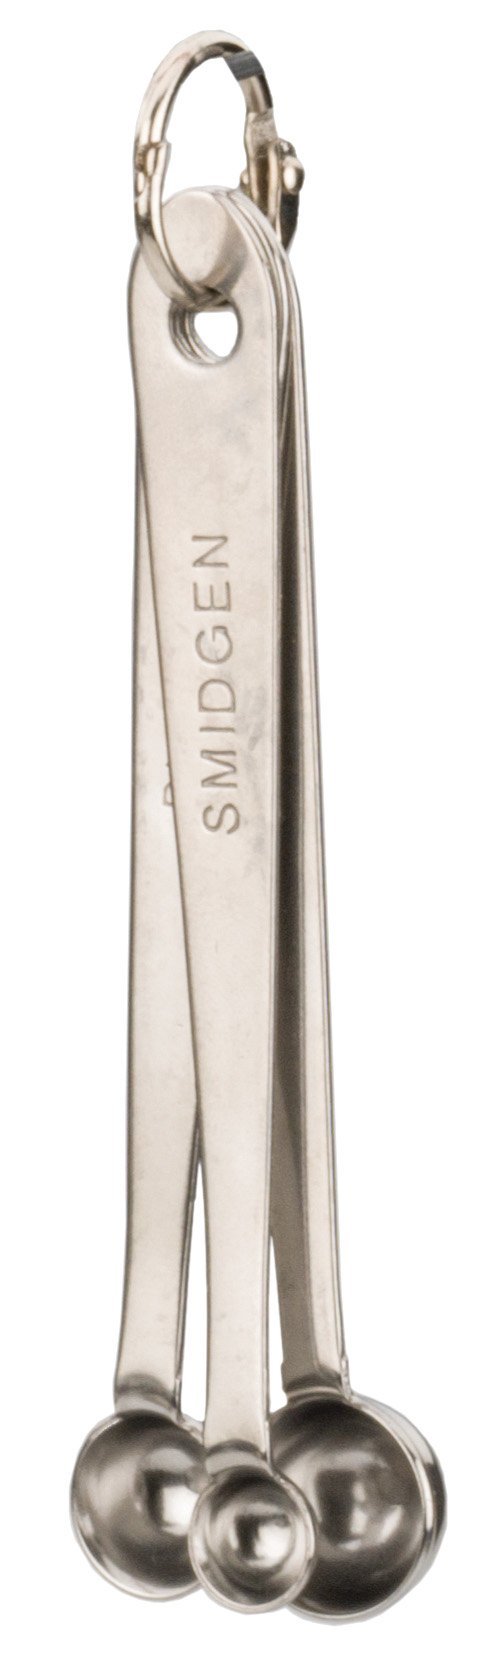 RSVP International Endurance 18/8 Stainless Steel 3-Piece Mini Measuring Spoon Set,Silver,Ring holds spoons together for easy storage - LeoForward Australia